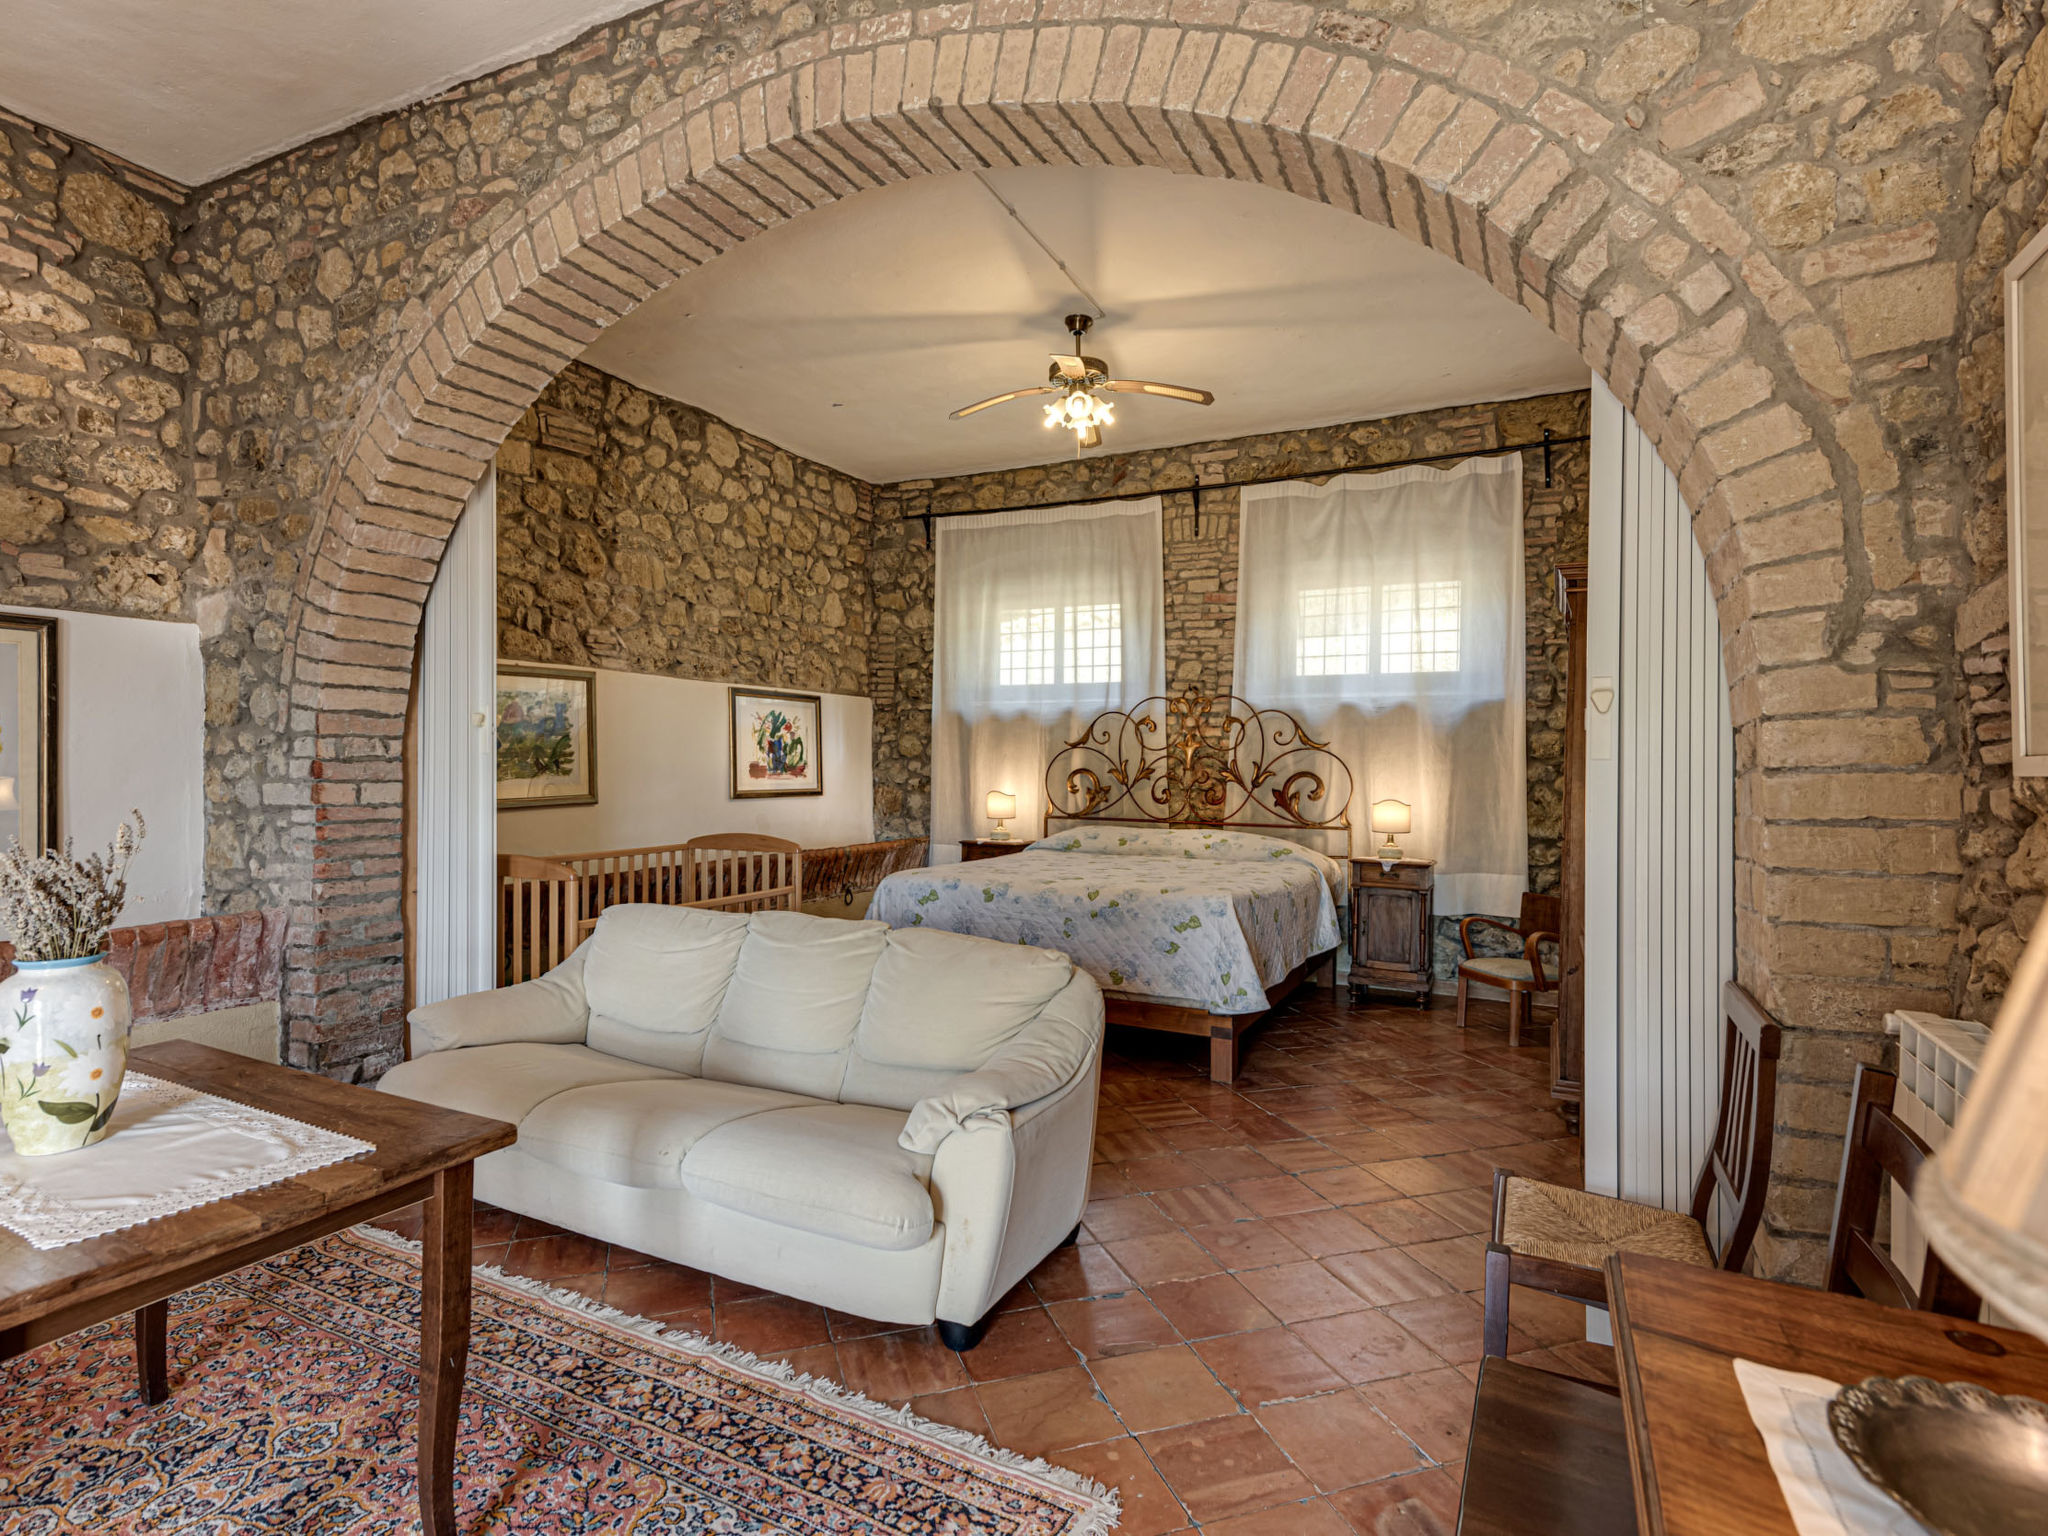 Foto 5 - Appartamento con 1 camera da letto a San Gimignano con piscina e giardino